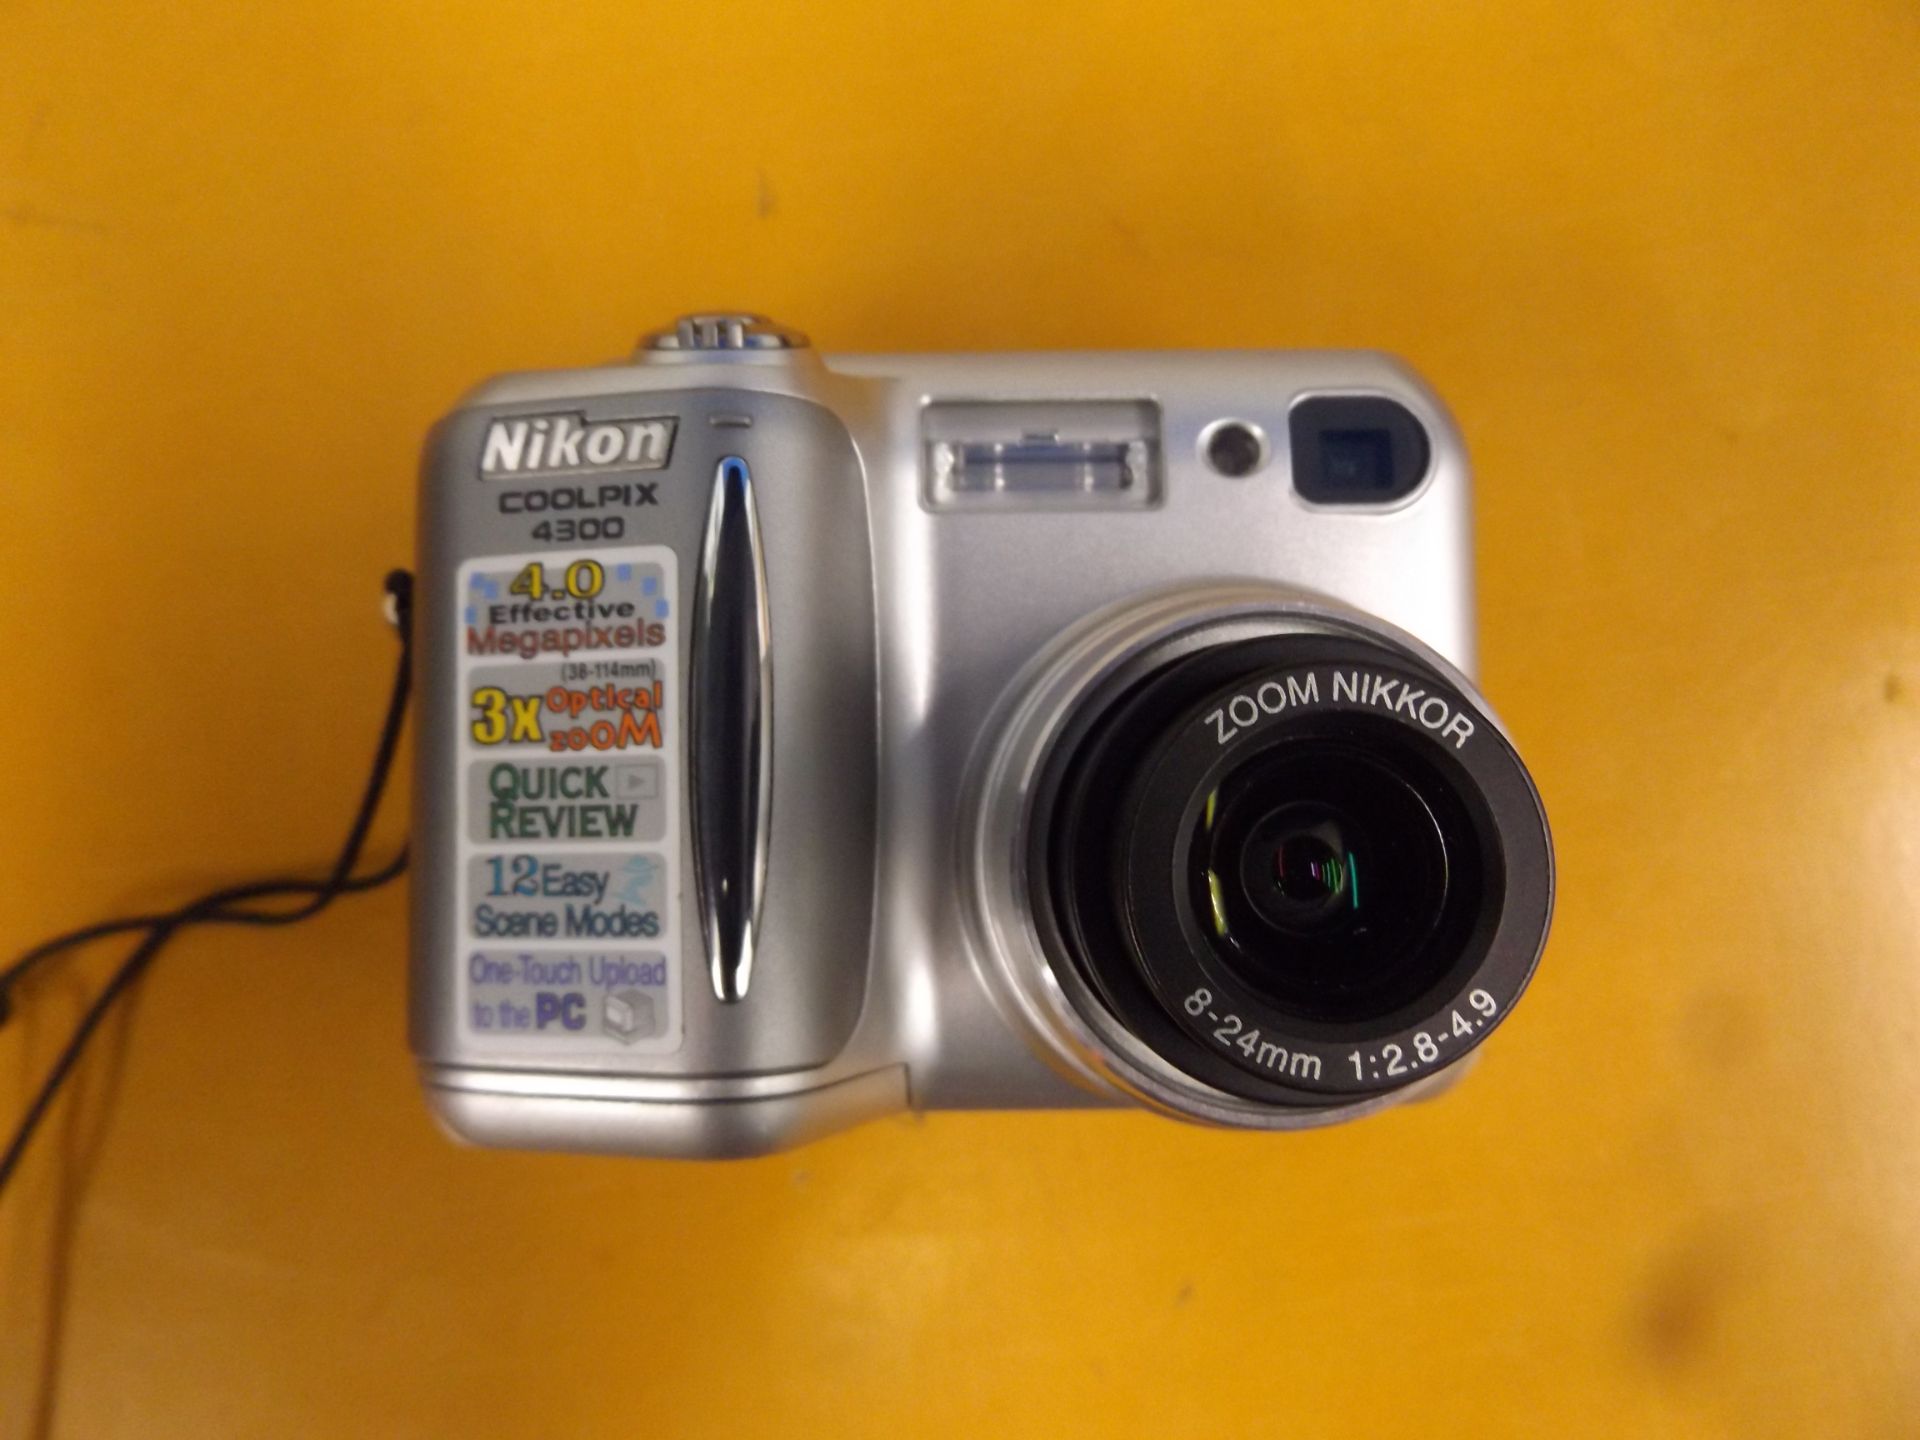 Nikon Coolpix 4300 4.0 Mp Digital Camera - Image 3 of 7